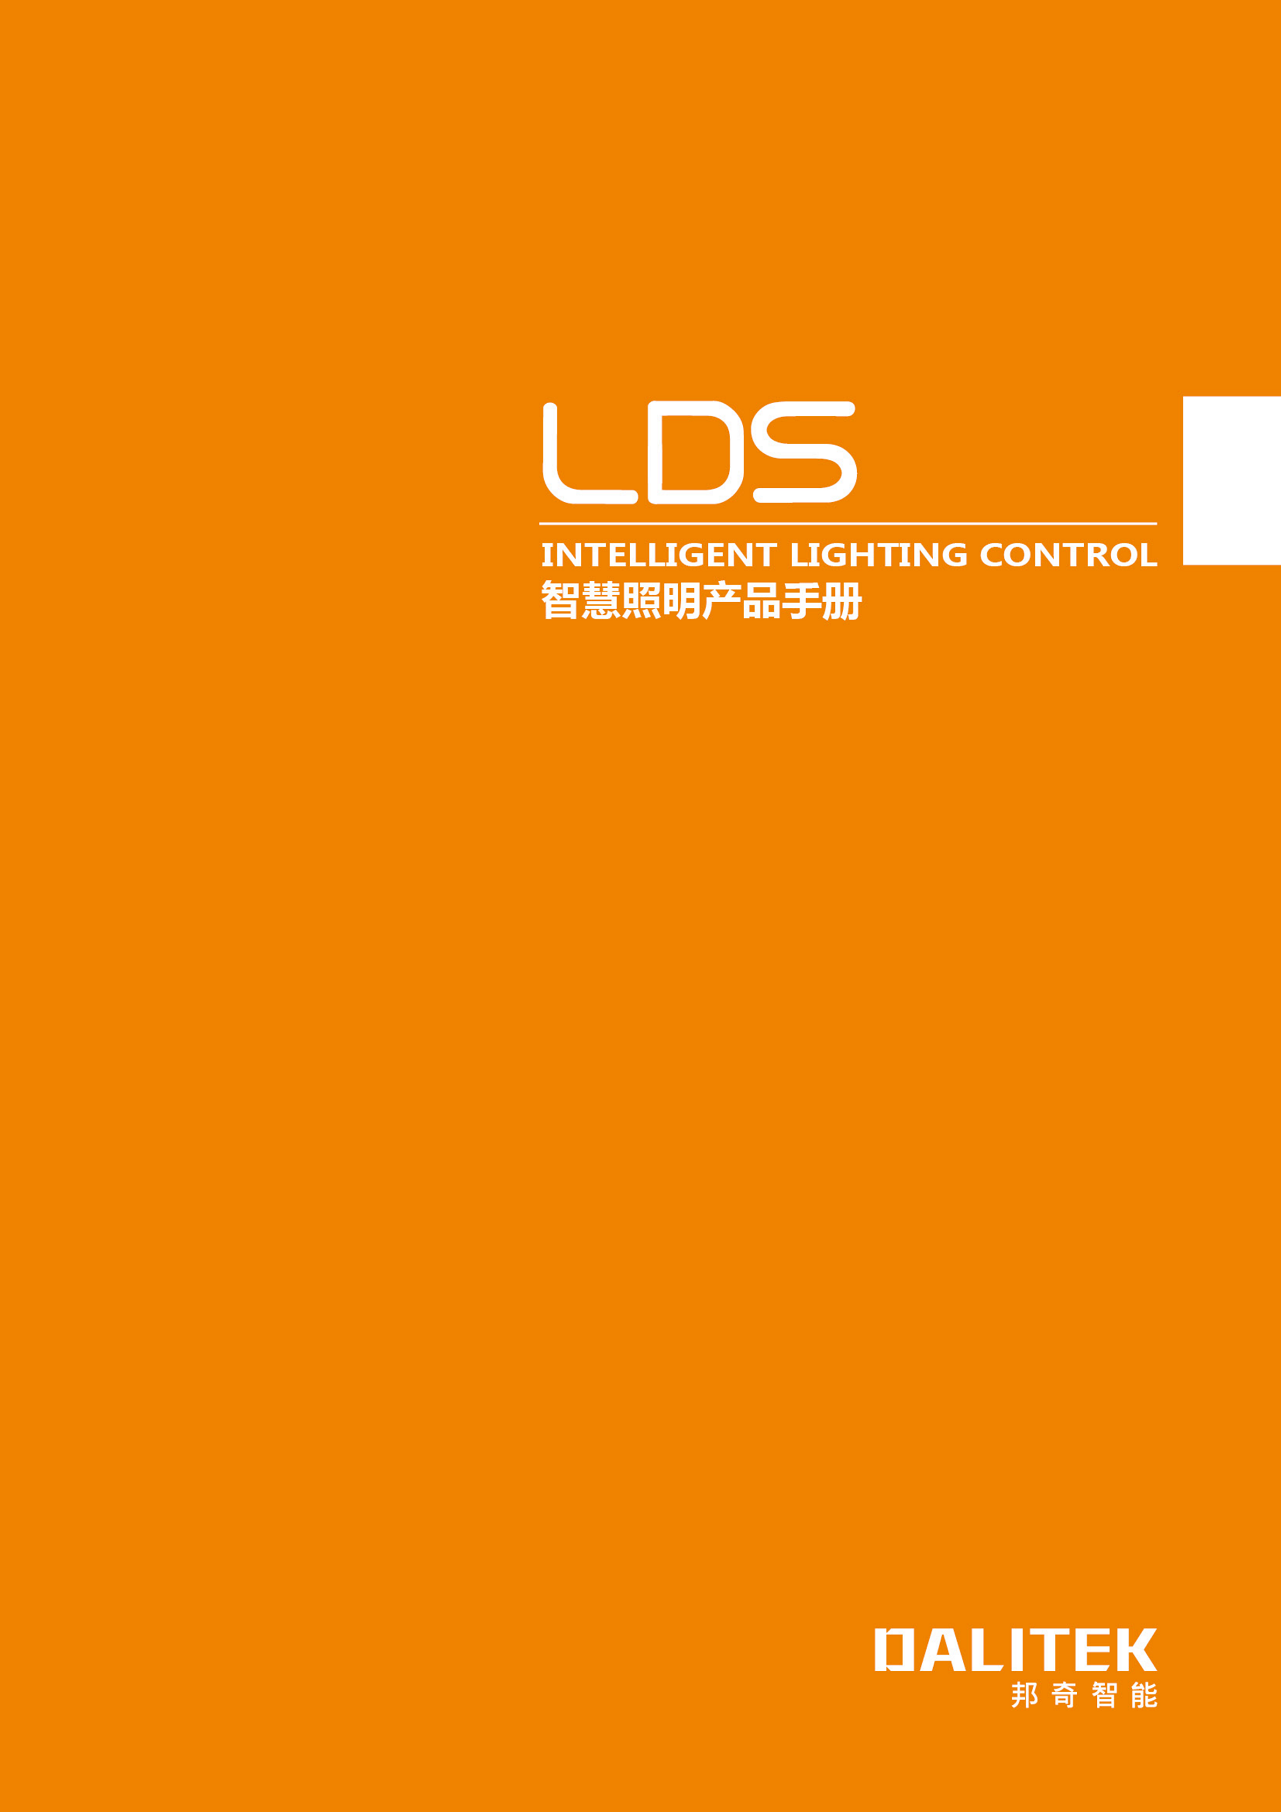 LDS Dalitek 智能照明产品